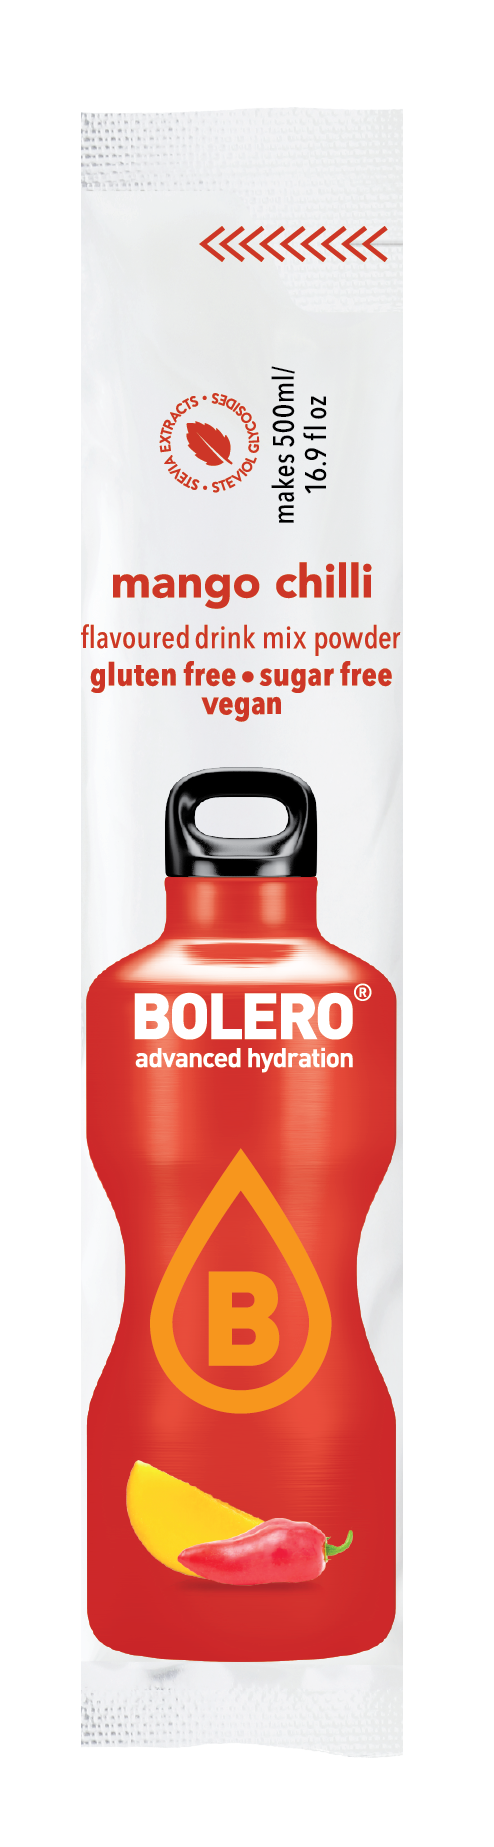 Bolero Advanced Hydration - Chilli Mango Small Sachets (Box of 12 Small Sachets)